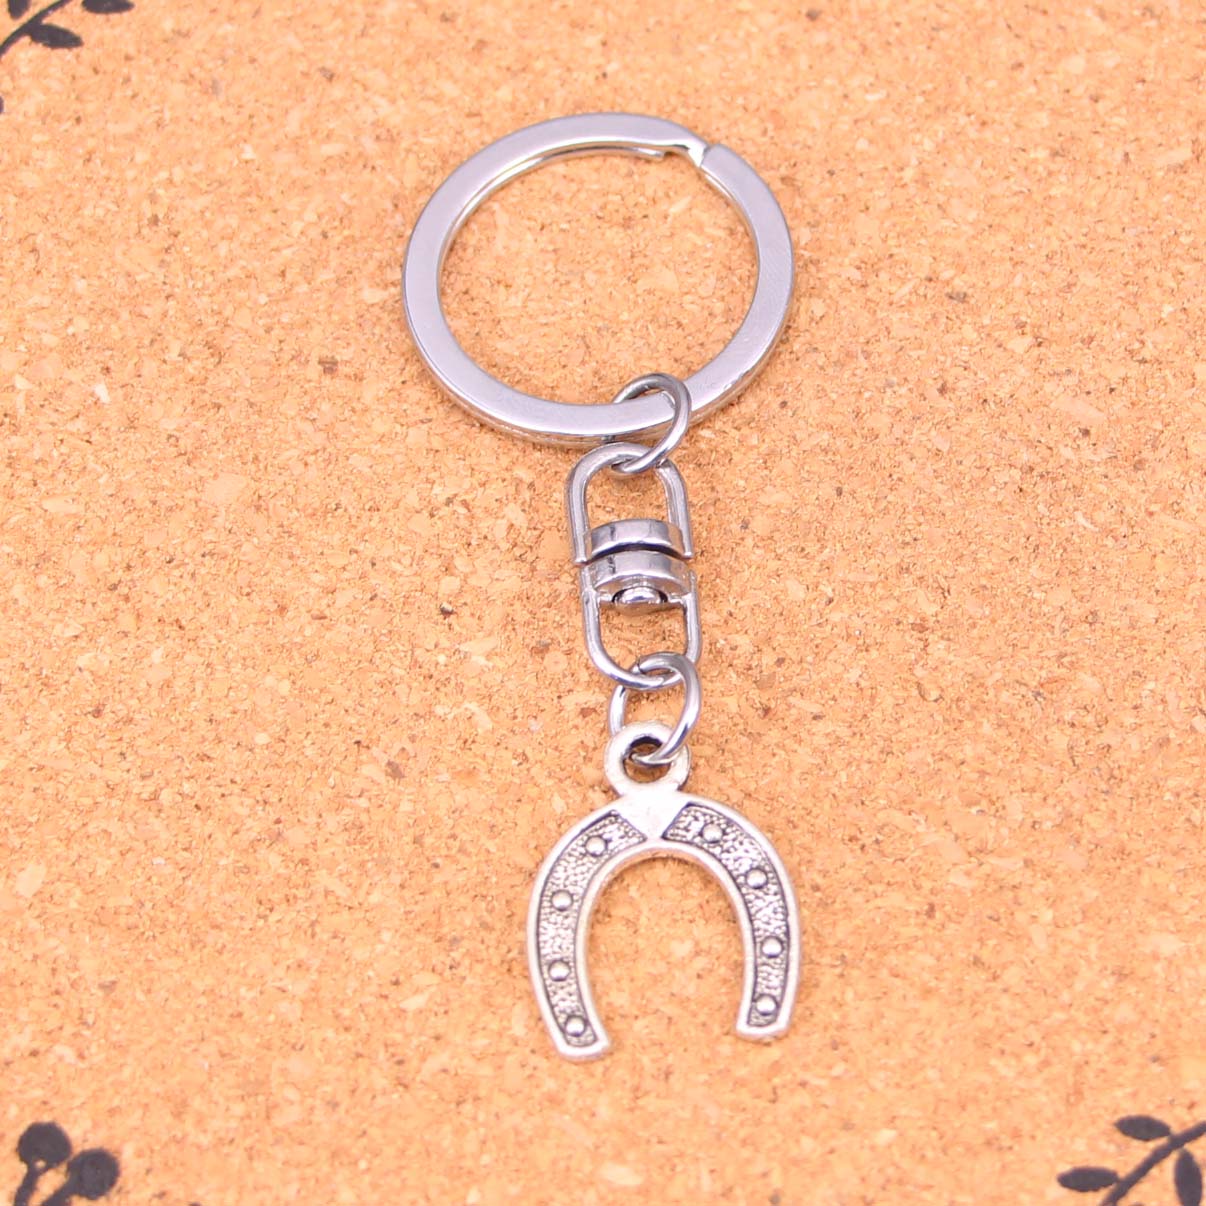 20Pcs lucky horseshoe Keychain Novelty Gadget Trinket Souvenir Christmas Gift Keychain Drop Shipping